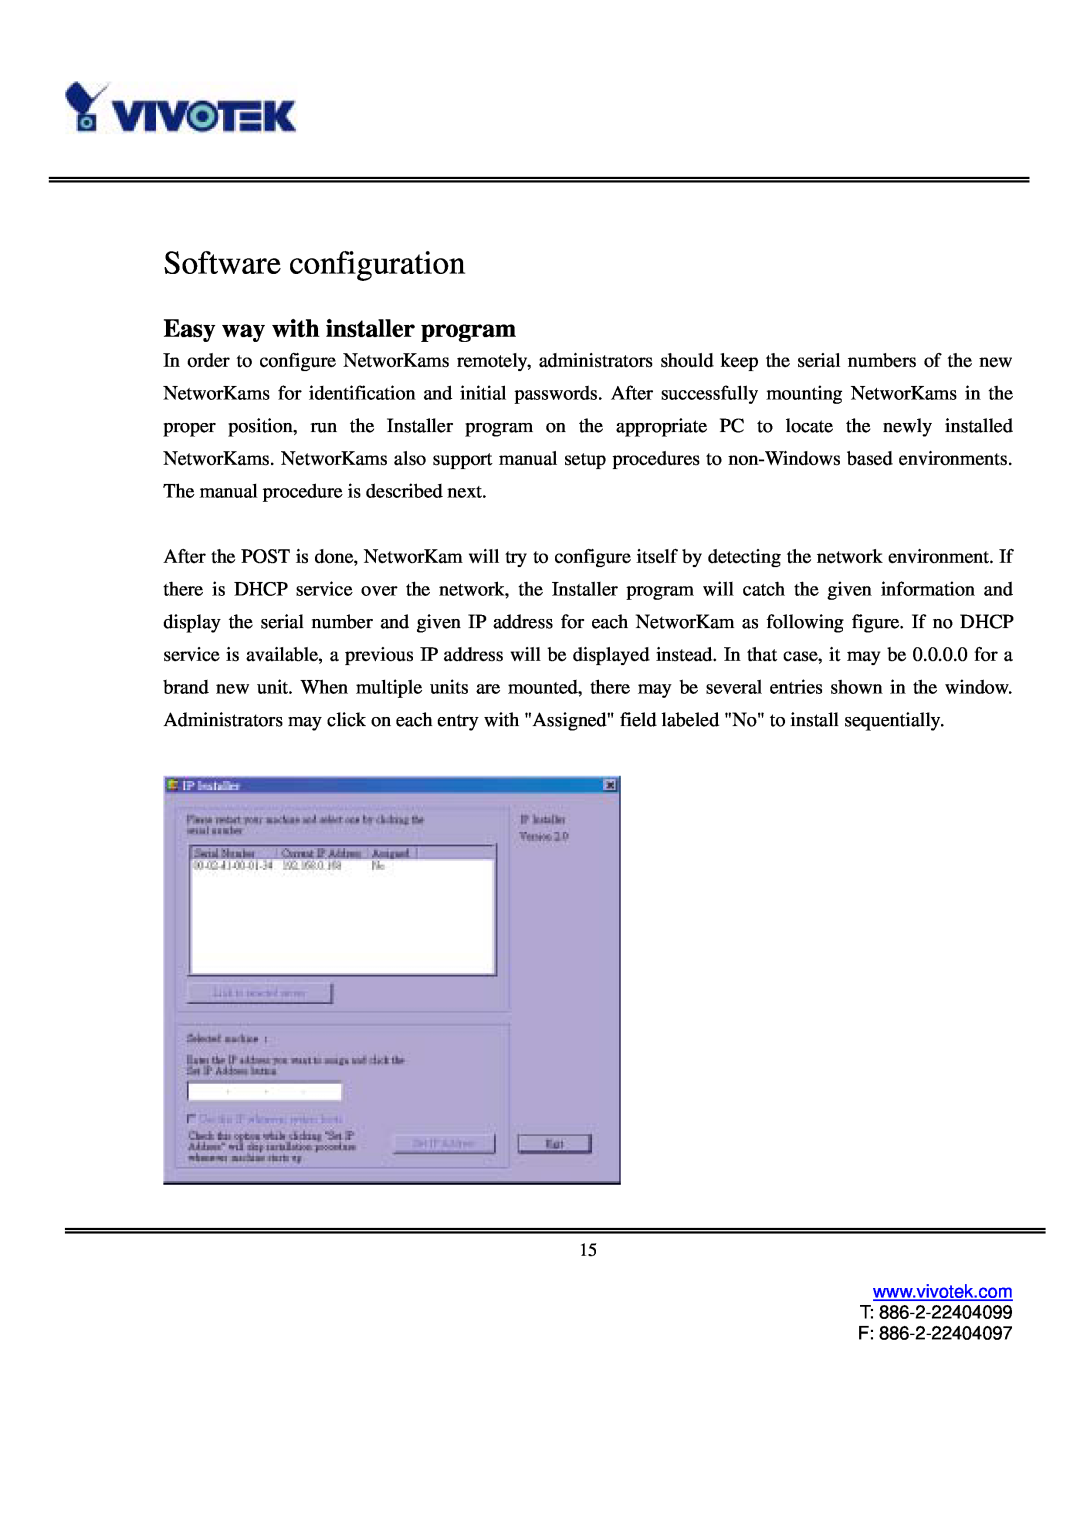 Vivotek IP3111/IP3121 user manual Software configuration, Easy way with installer program 